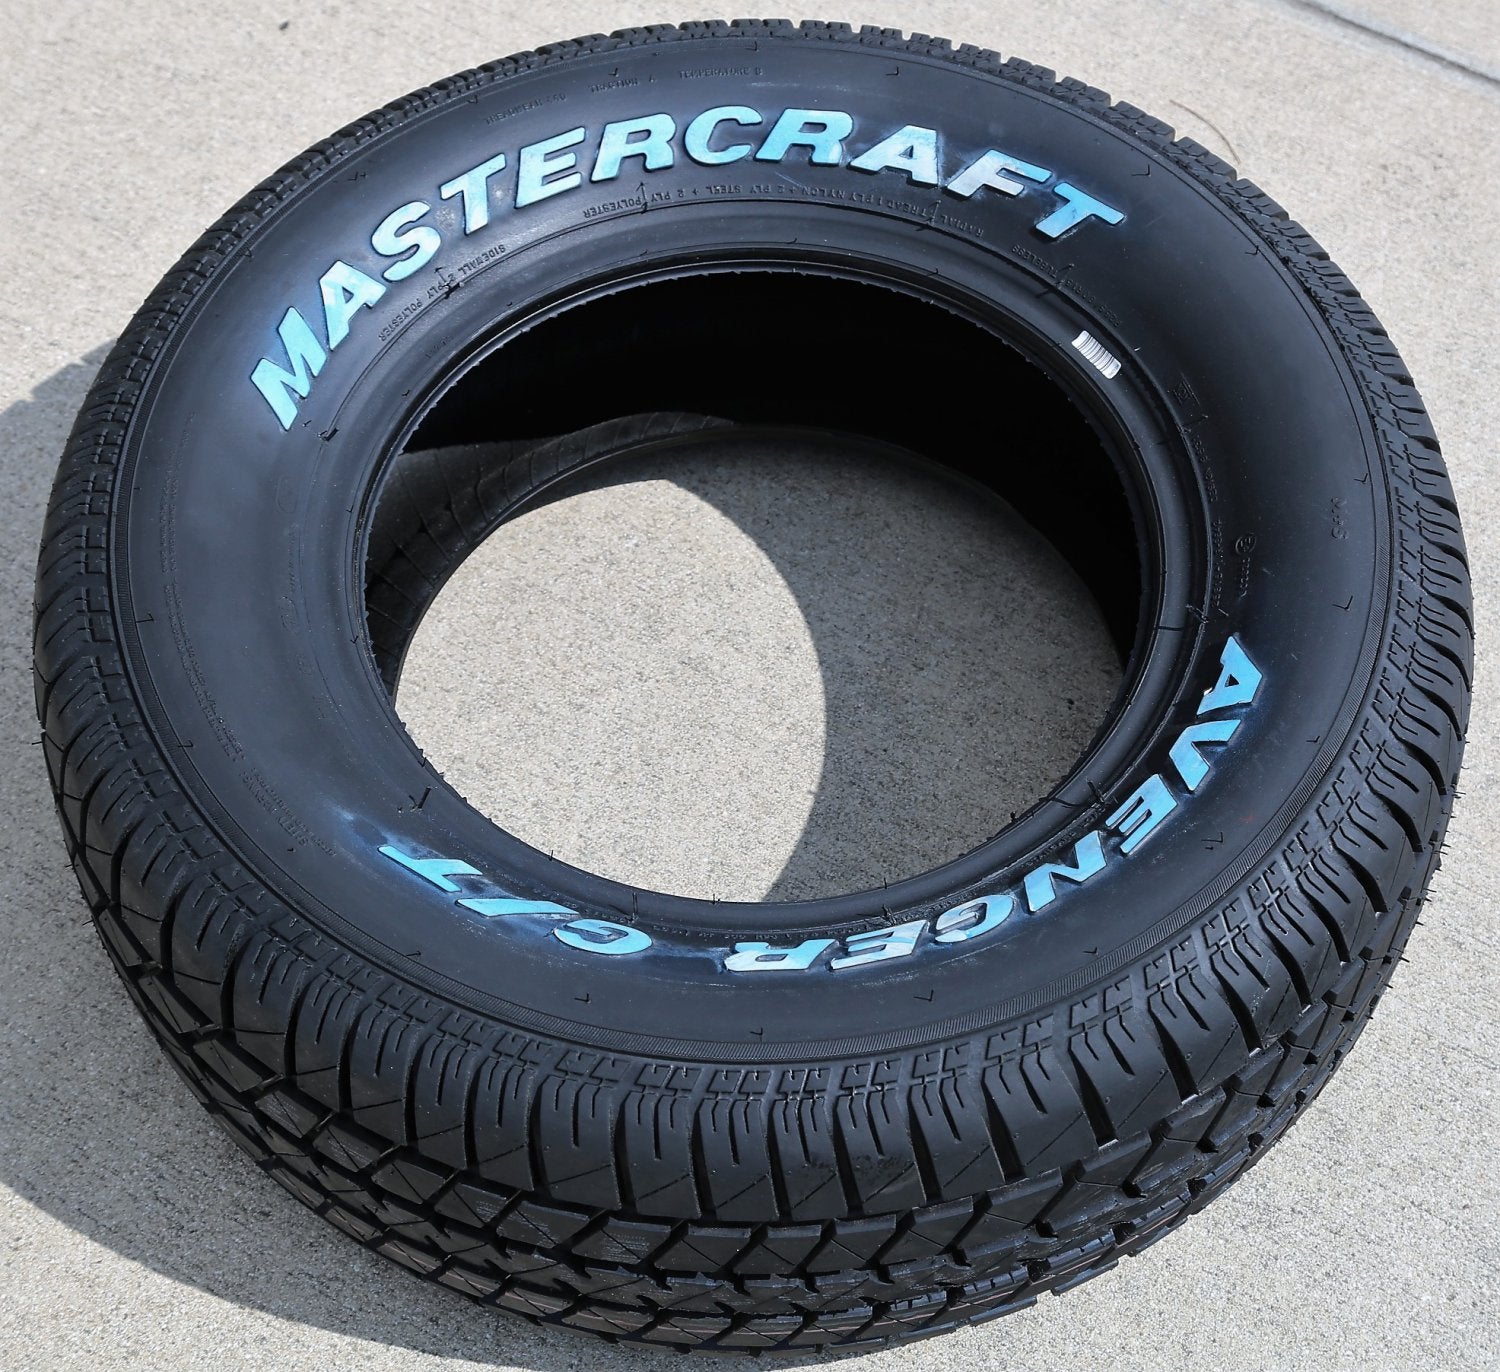 Tire Mastercraft Avenger G/T 225/70R14 98T All Season